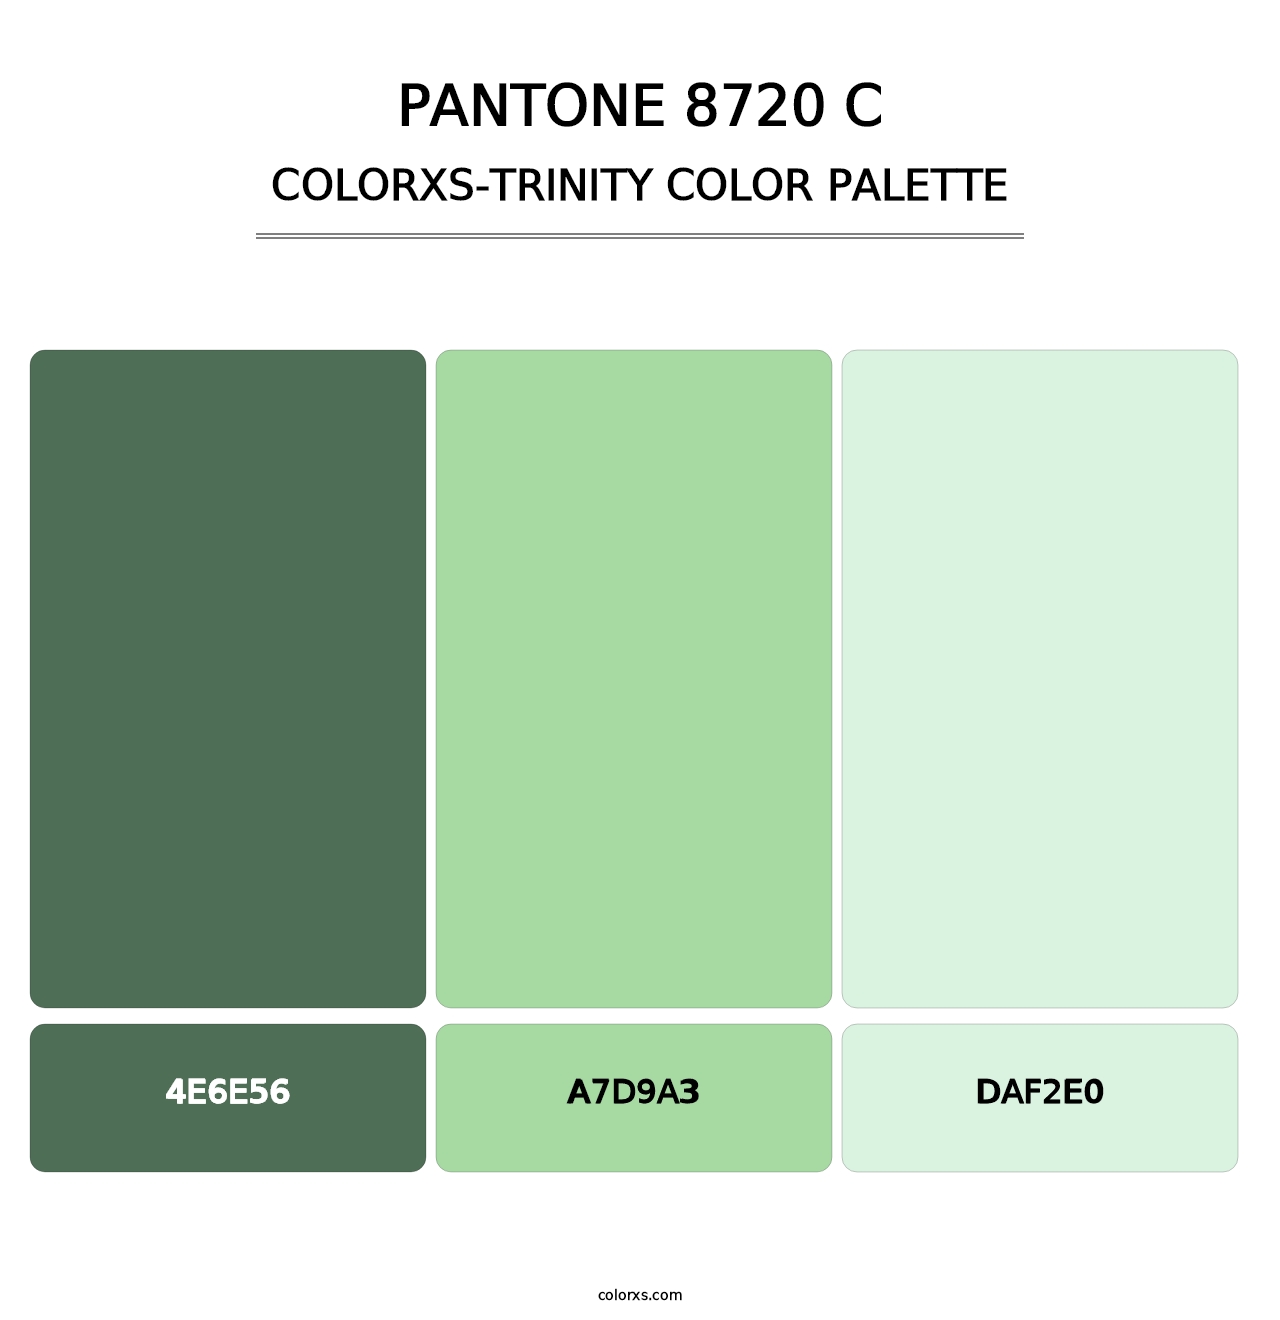 PANTONE 8720 C - Colorxs Trinity Palette